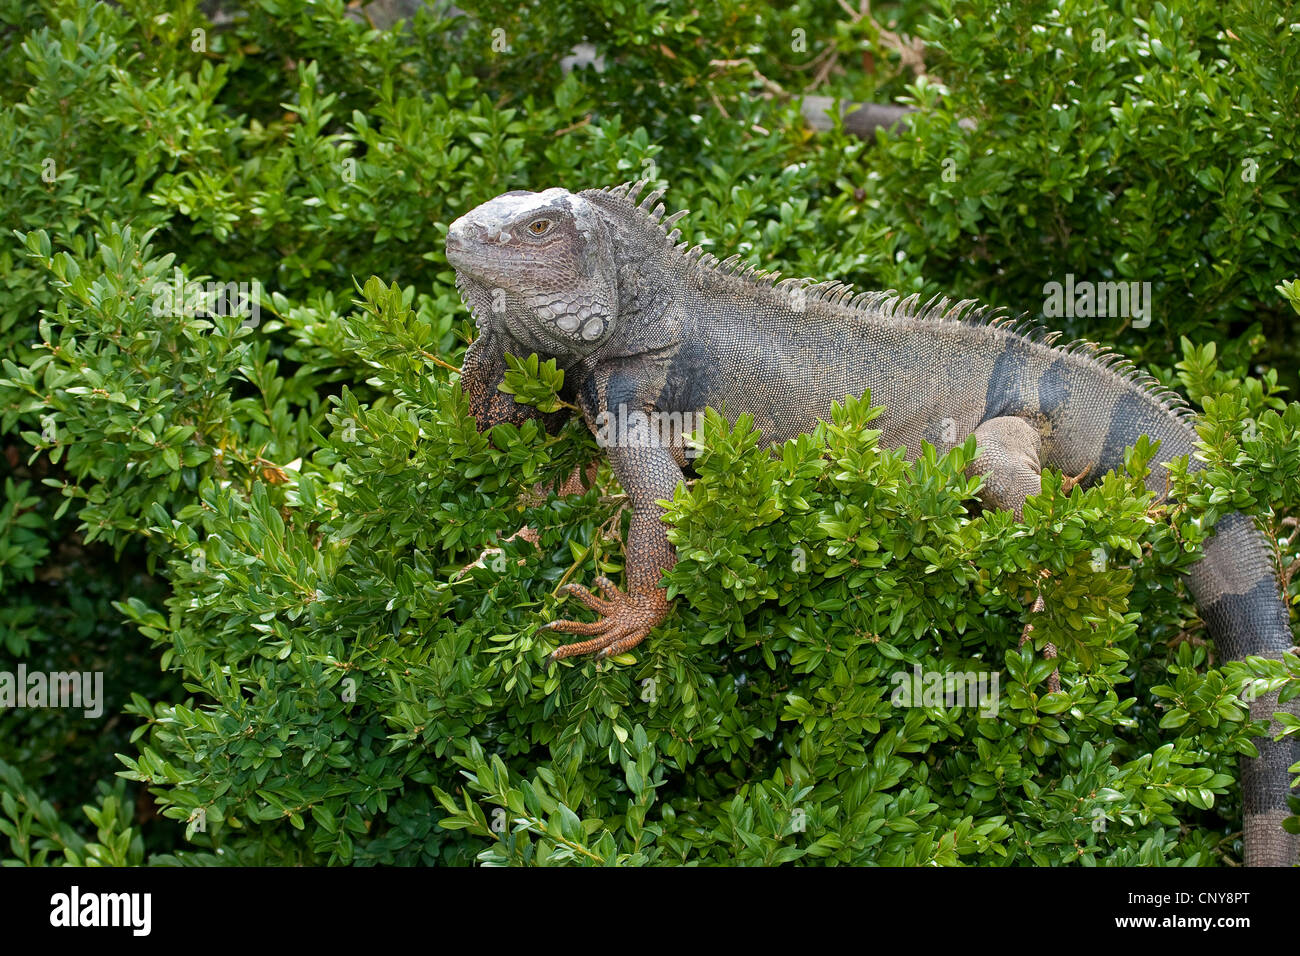 Iguana verde, comune (iguana Iguana iguana), seduti su legno di bosso Foto Stock